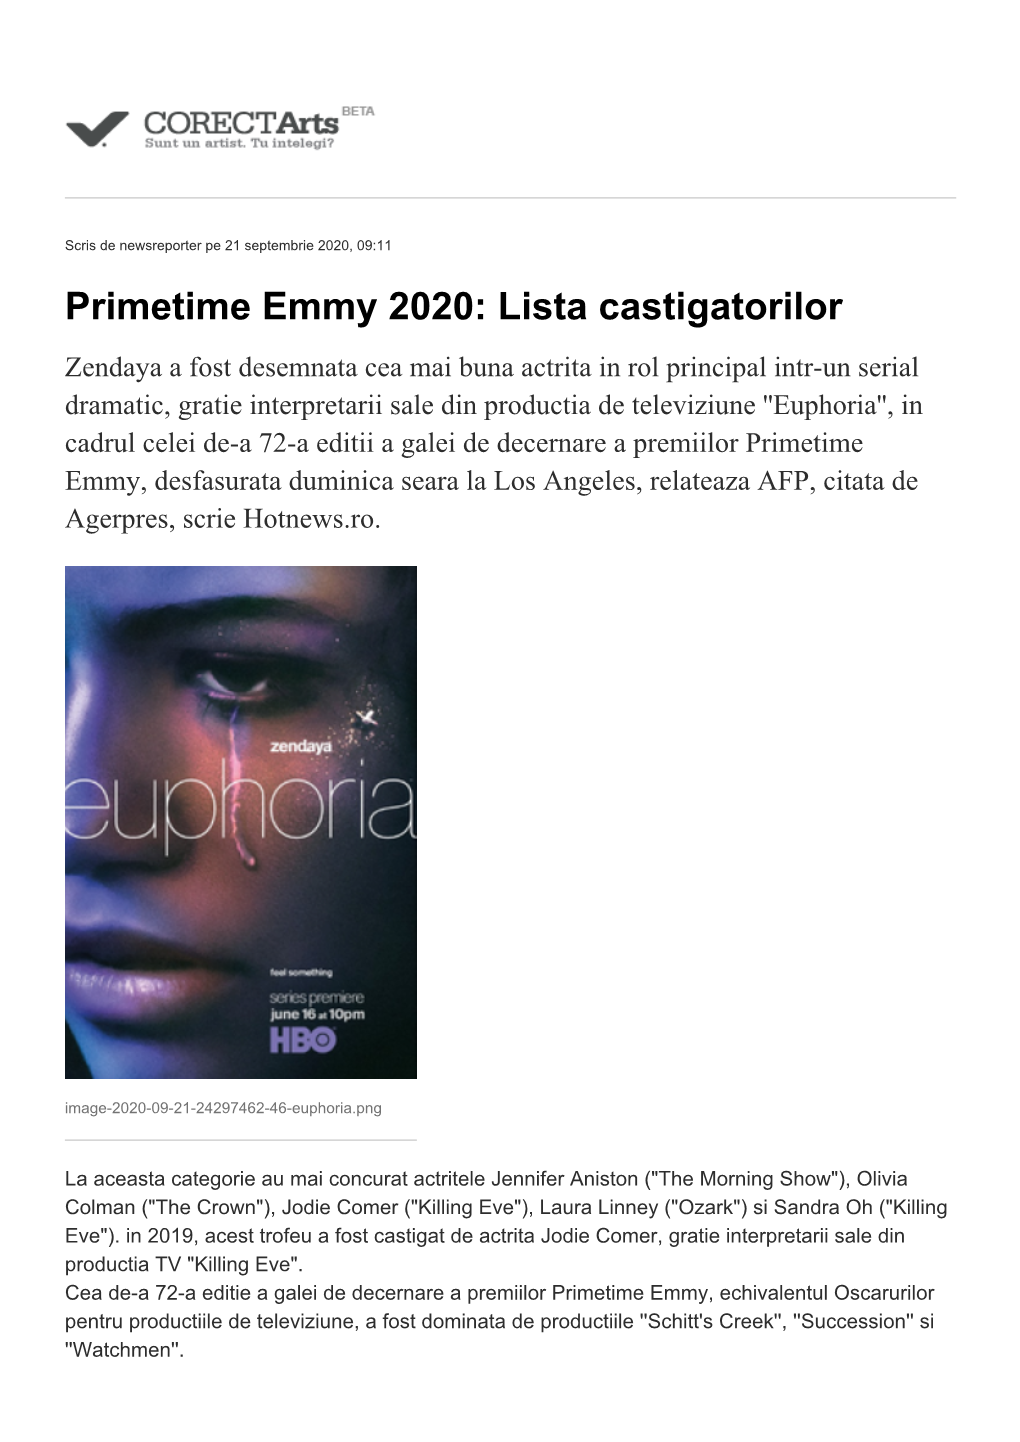 Primetime Emmy 2020